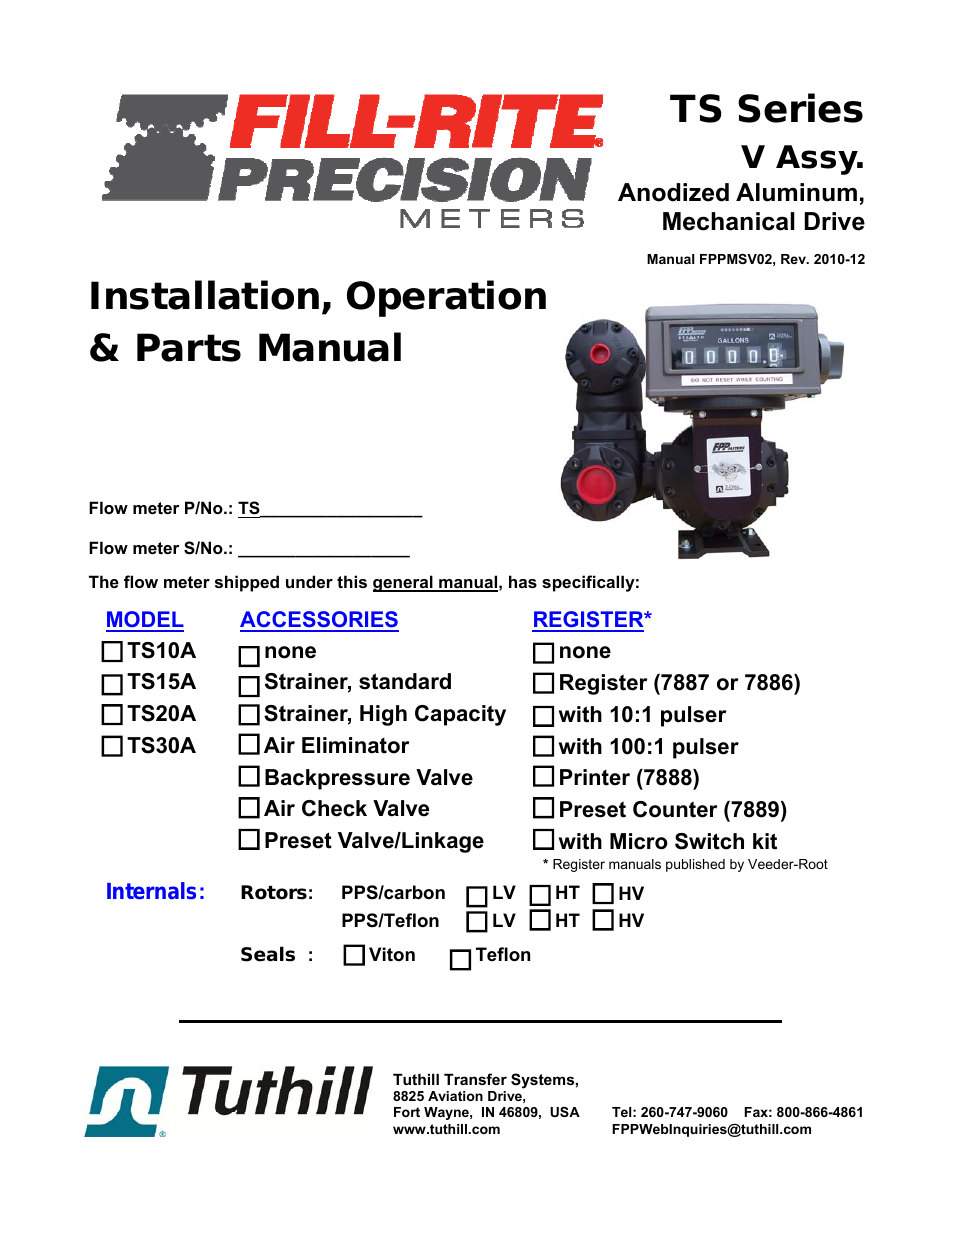 TS AA Mechanical Precision Meter